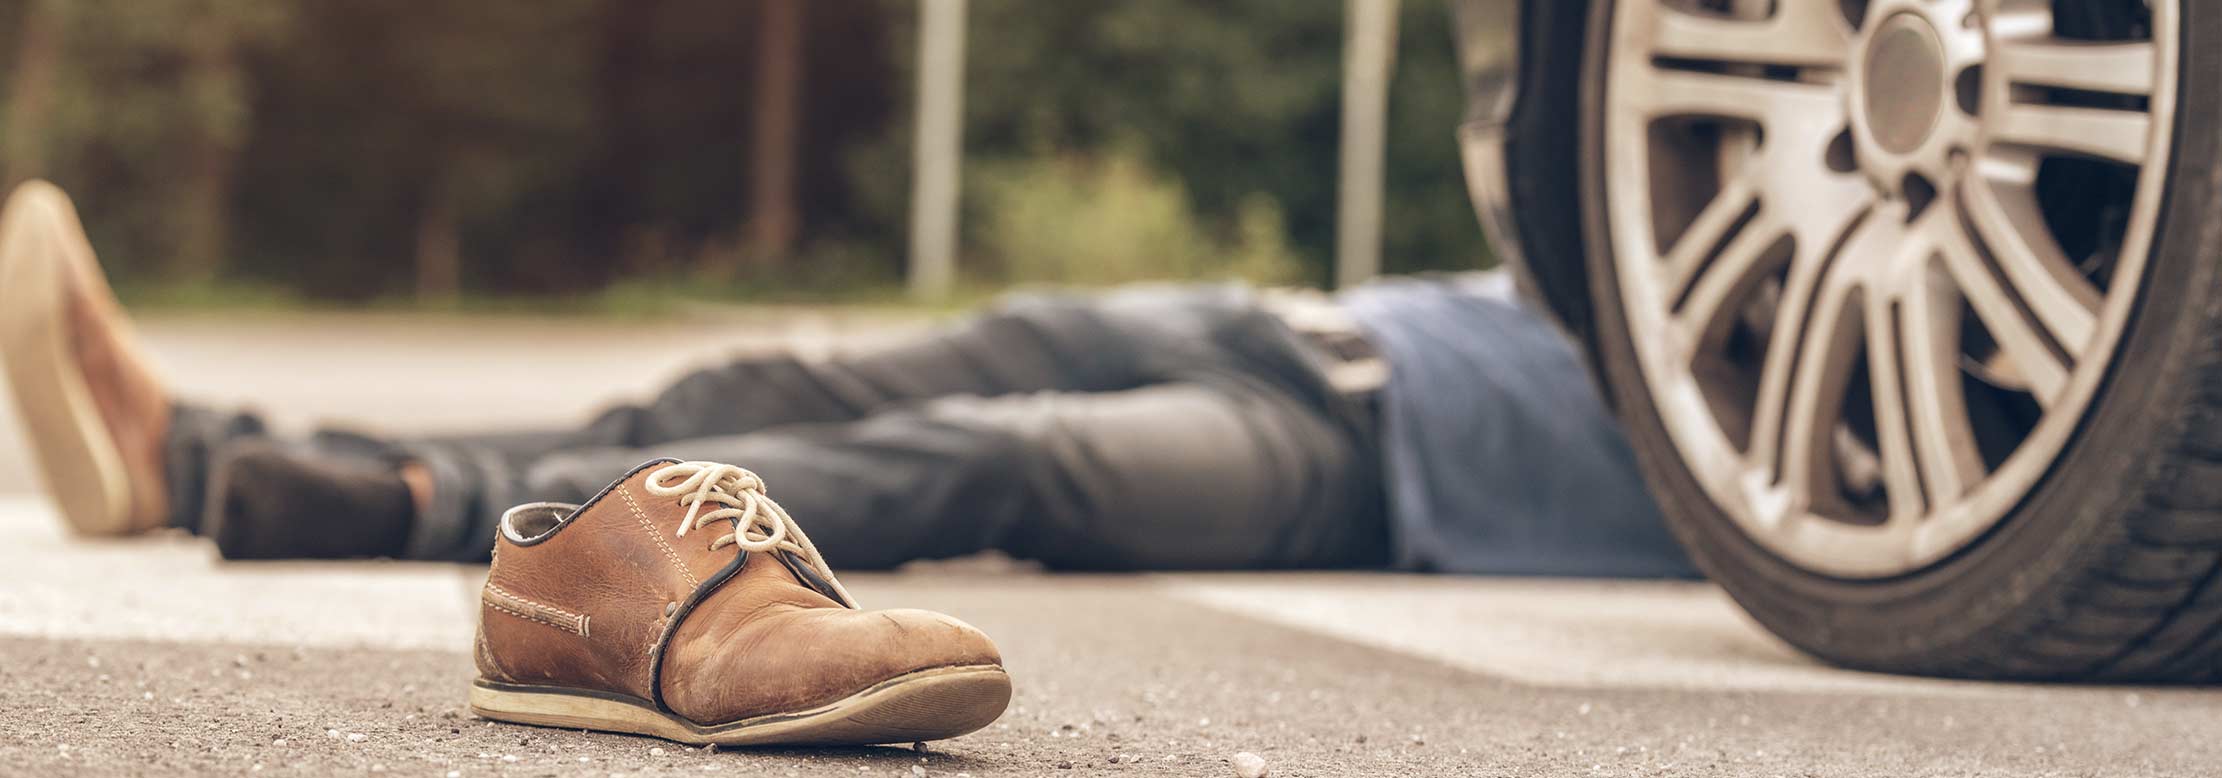 Pedestrian lies unconscious after being hit by a car.